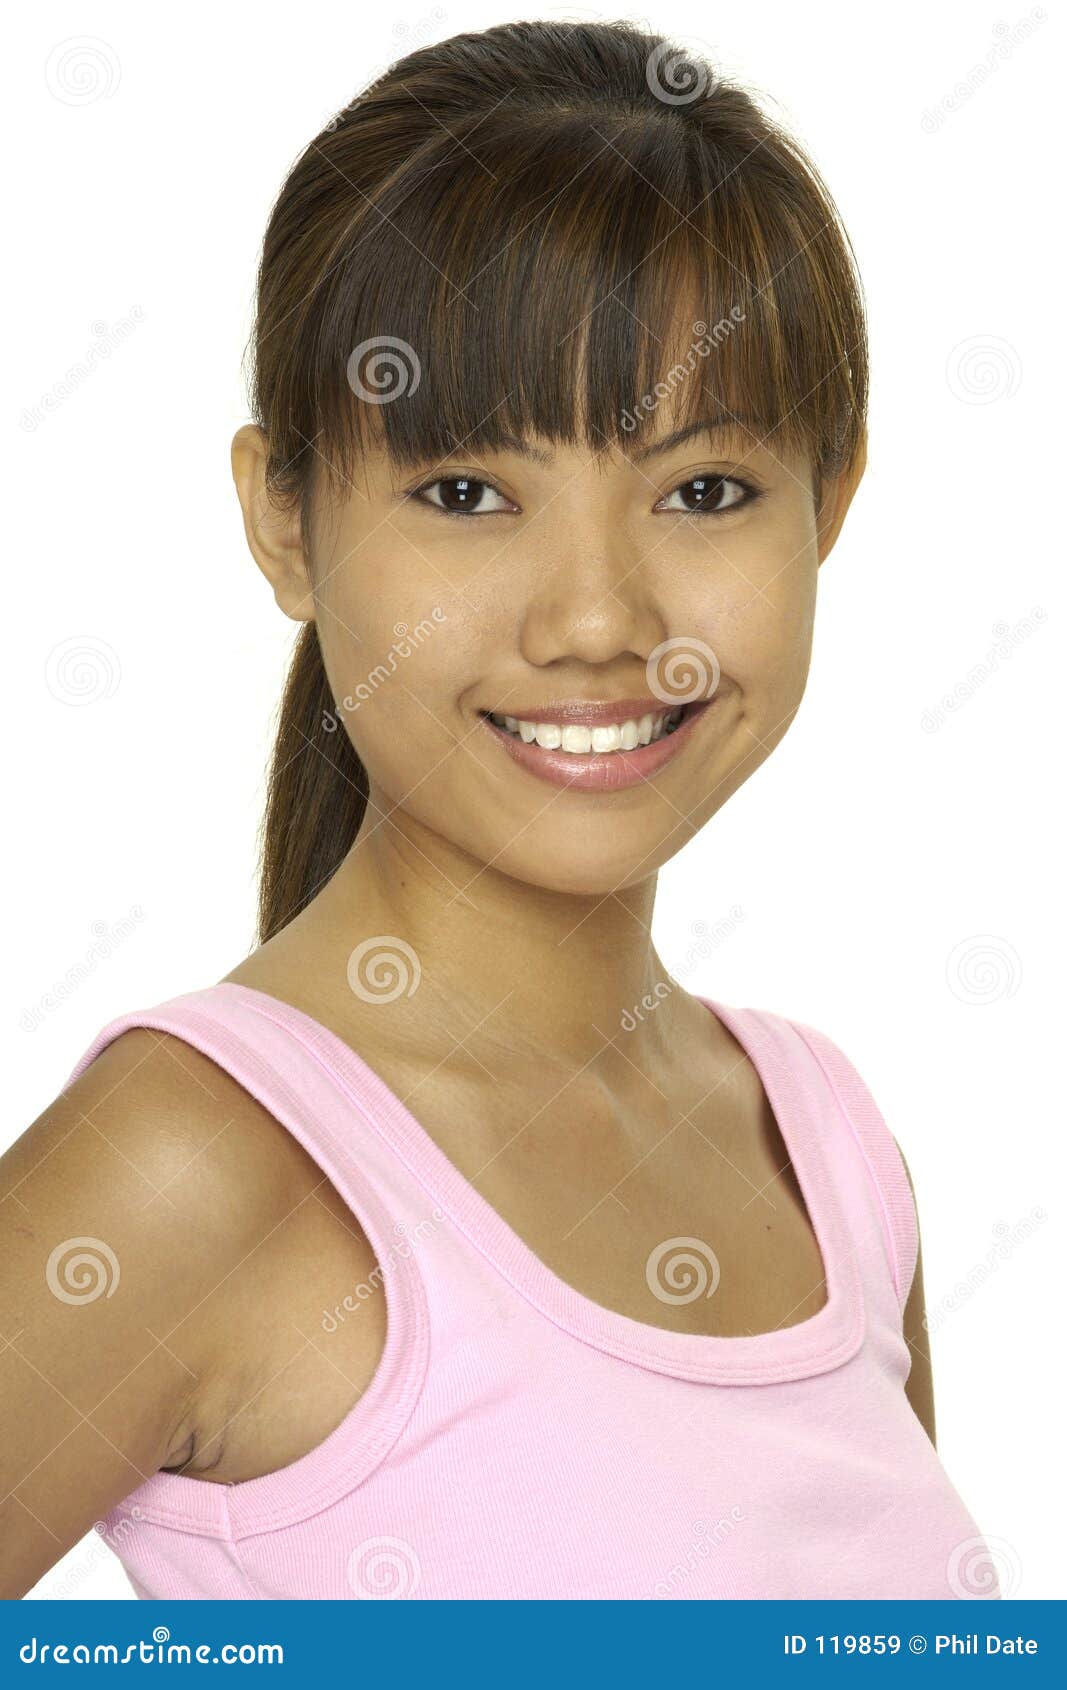 ethnic asian models or